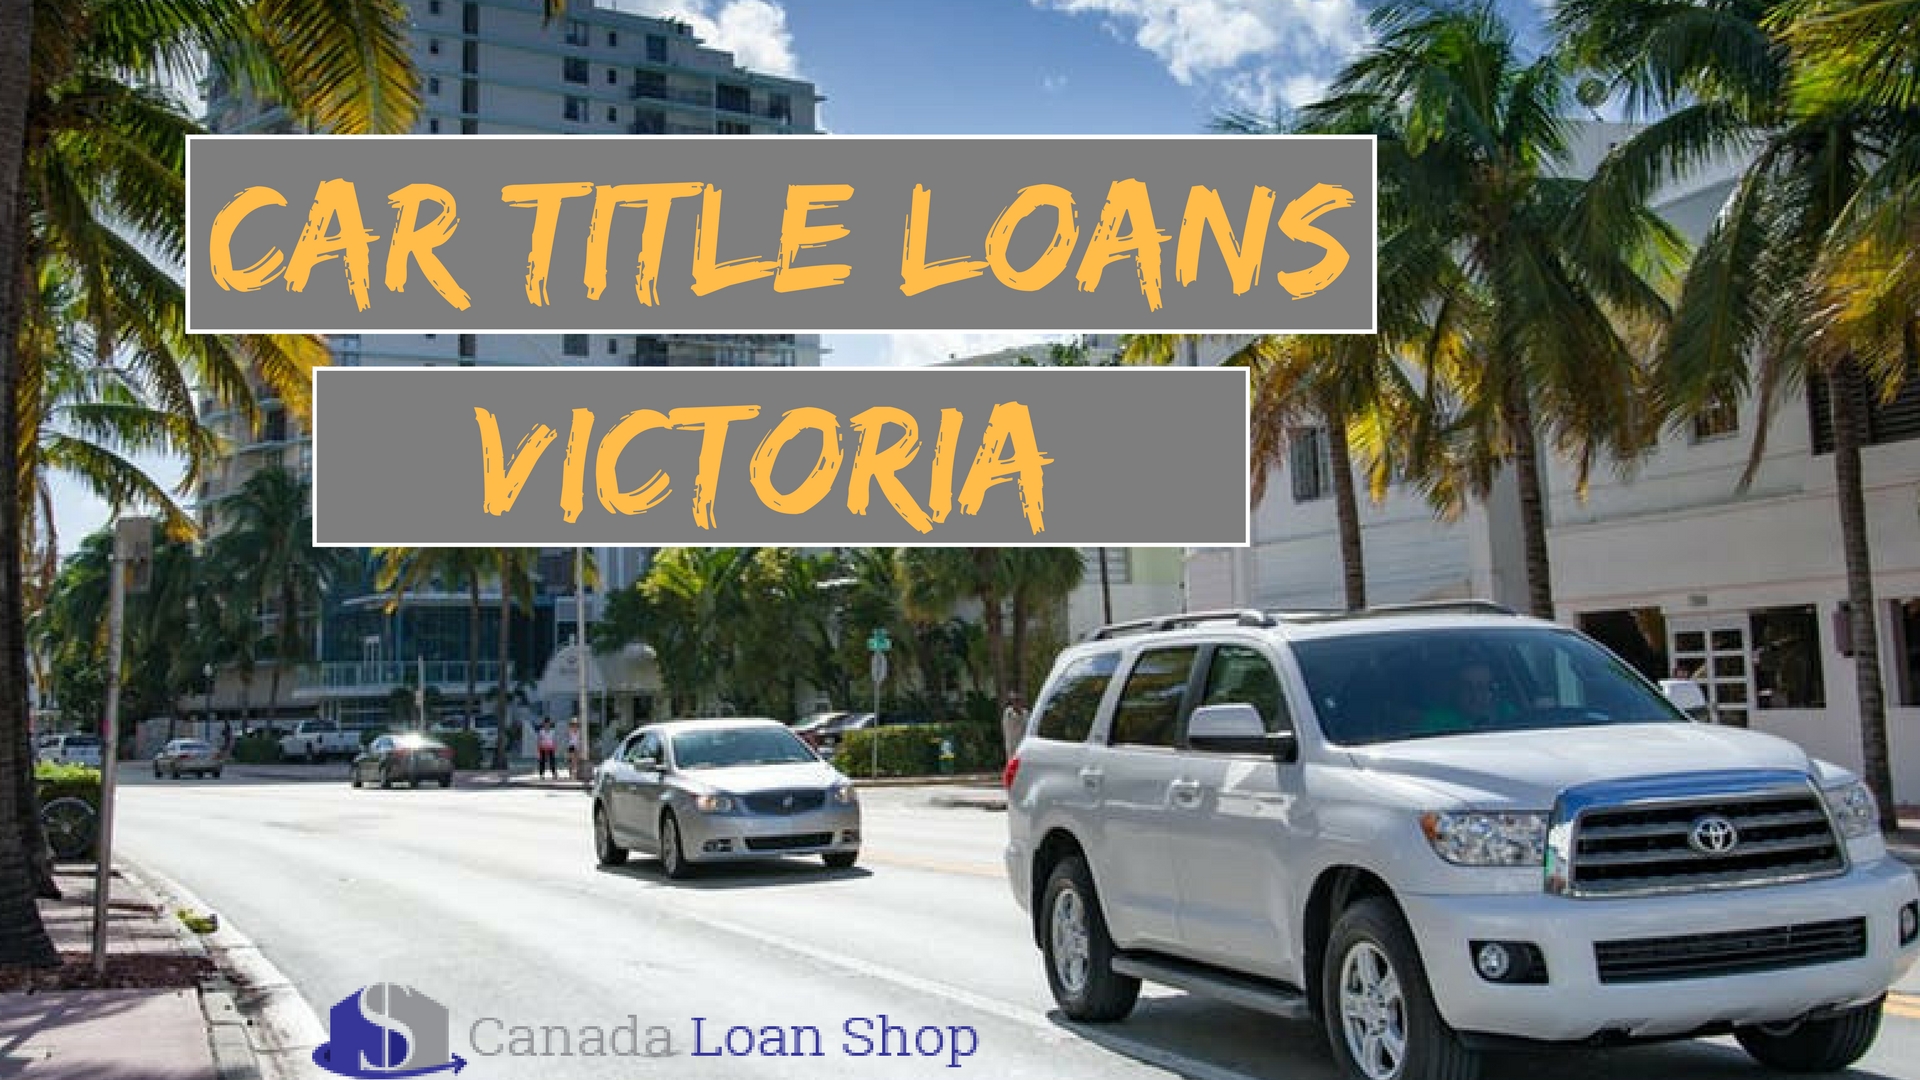 Car Title Loans Victoria